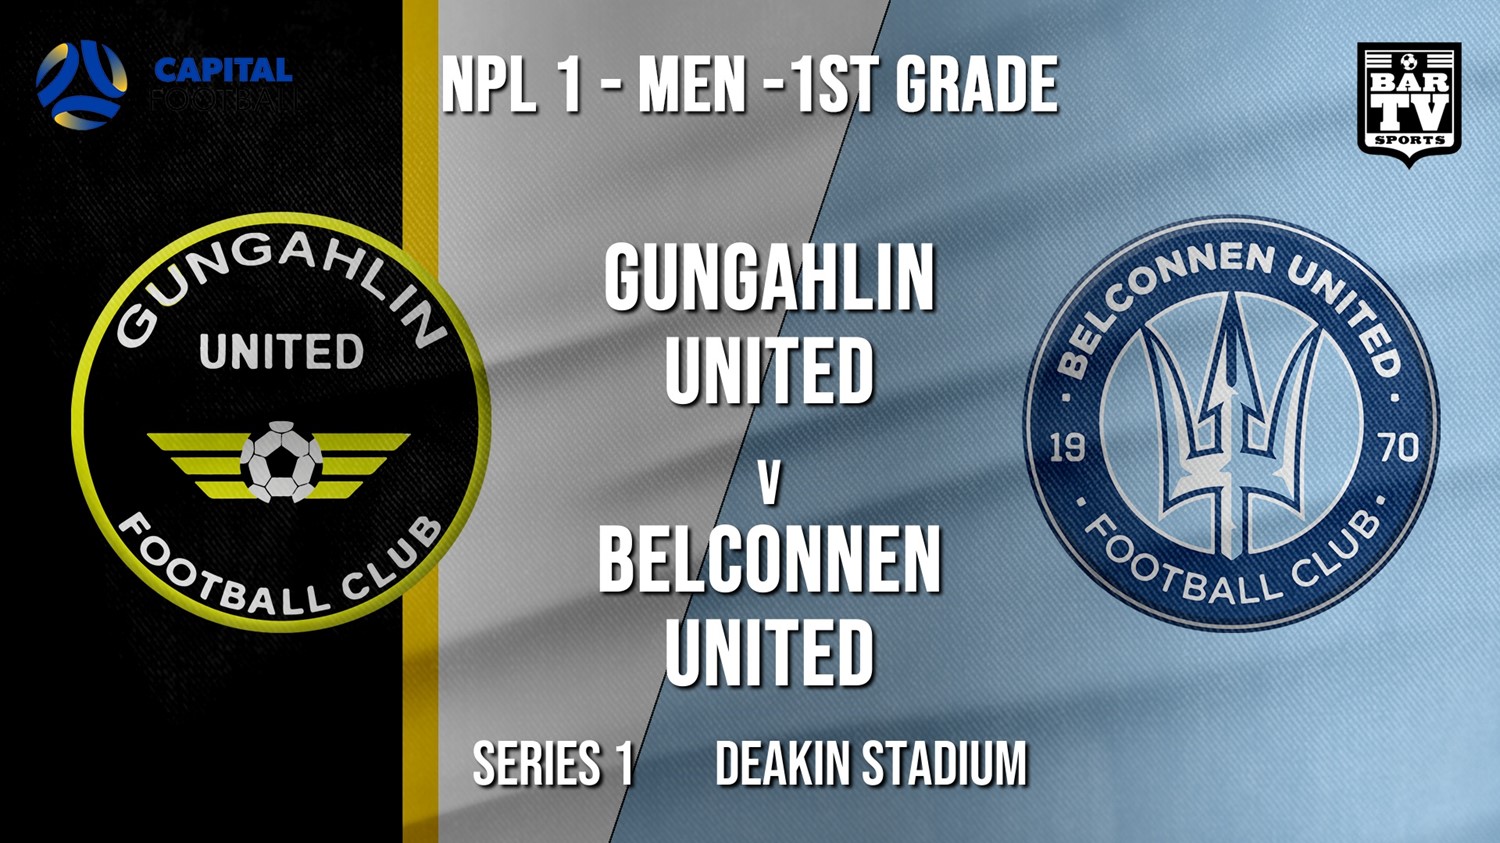 NPL - CAPITAL Series 1 - Gungahlin United FC v Belconnen United Minigame Slate Image